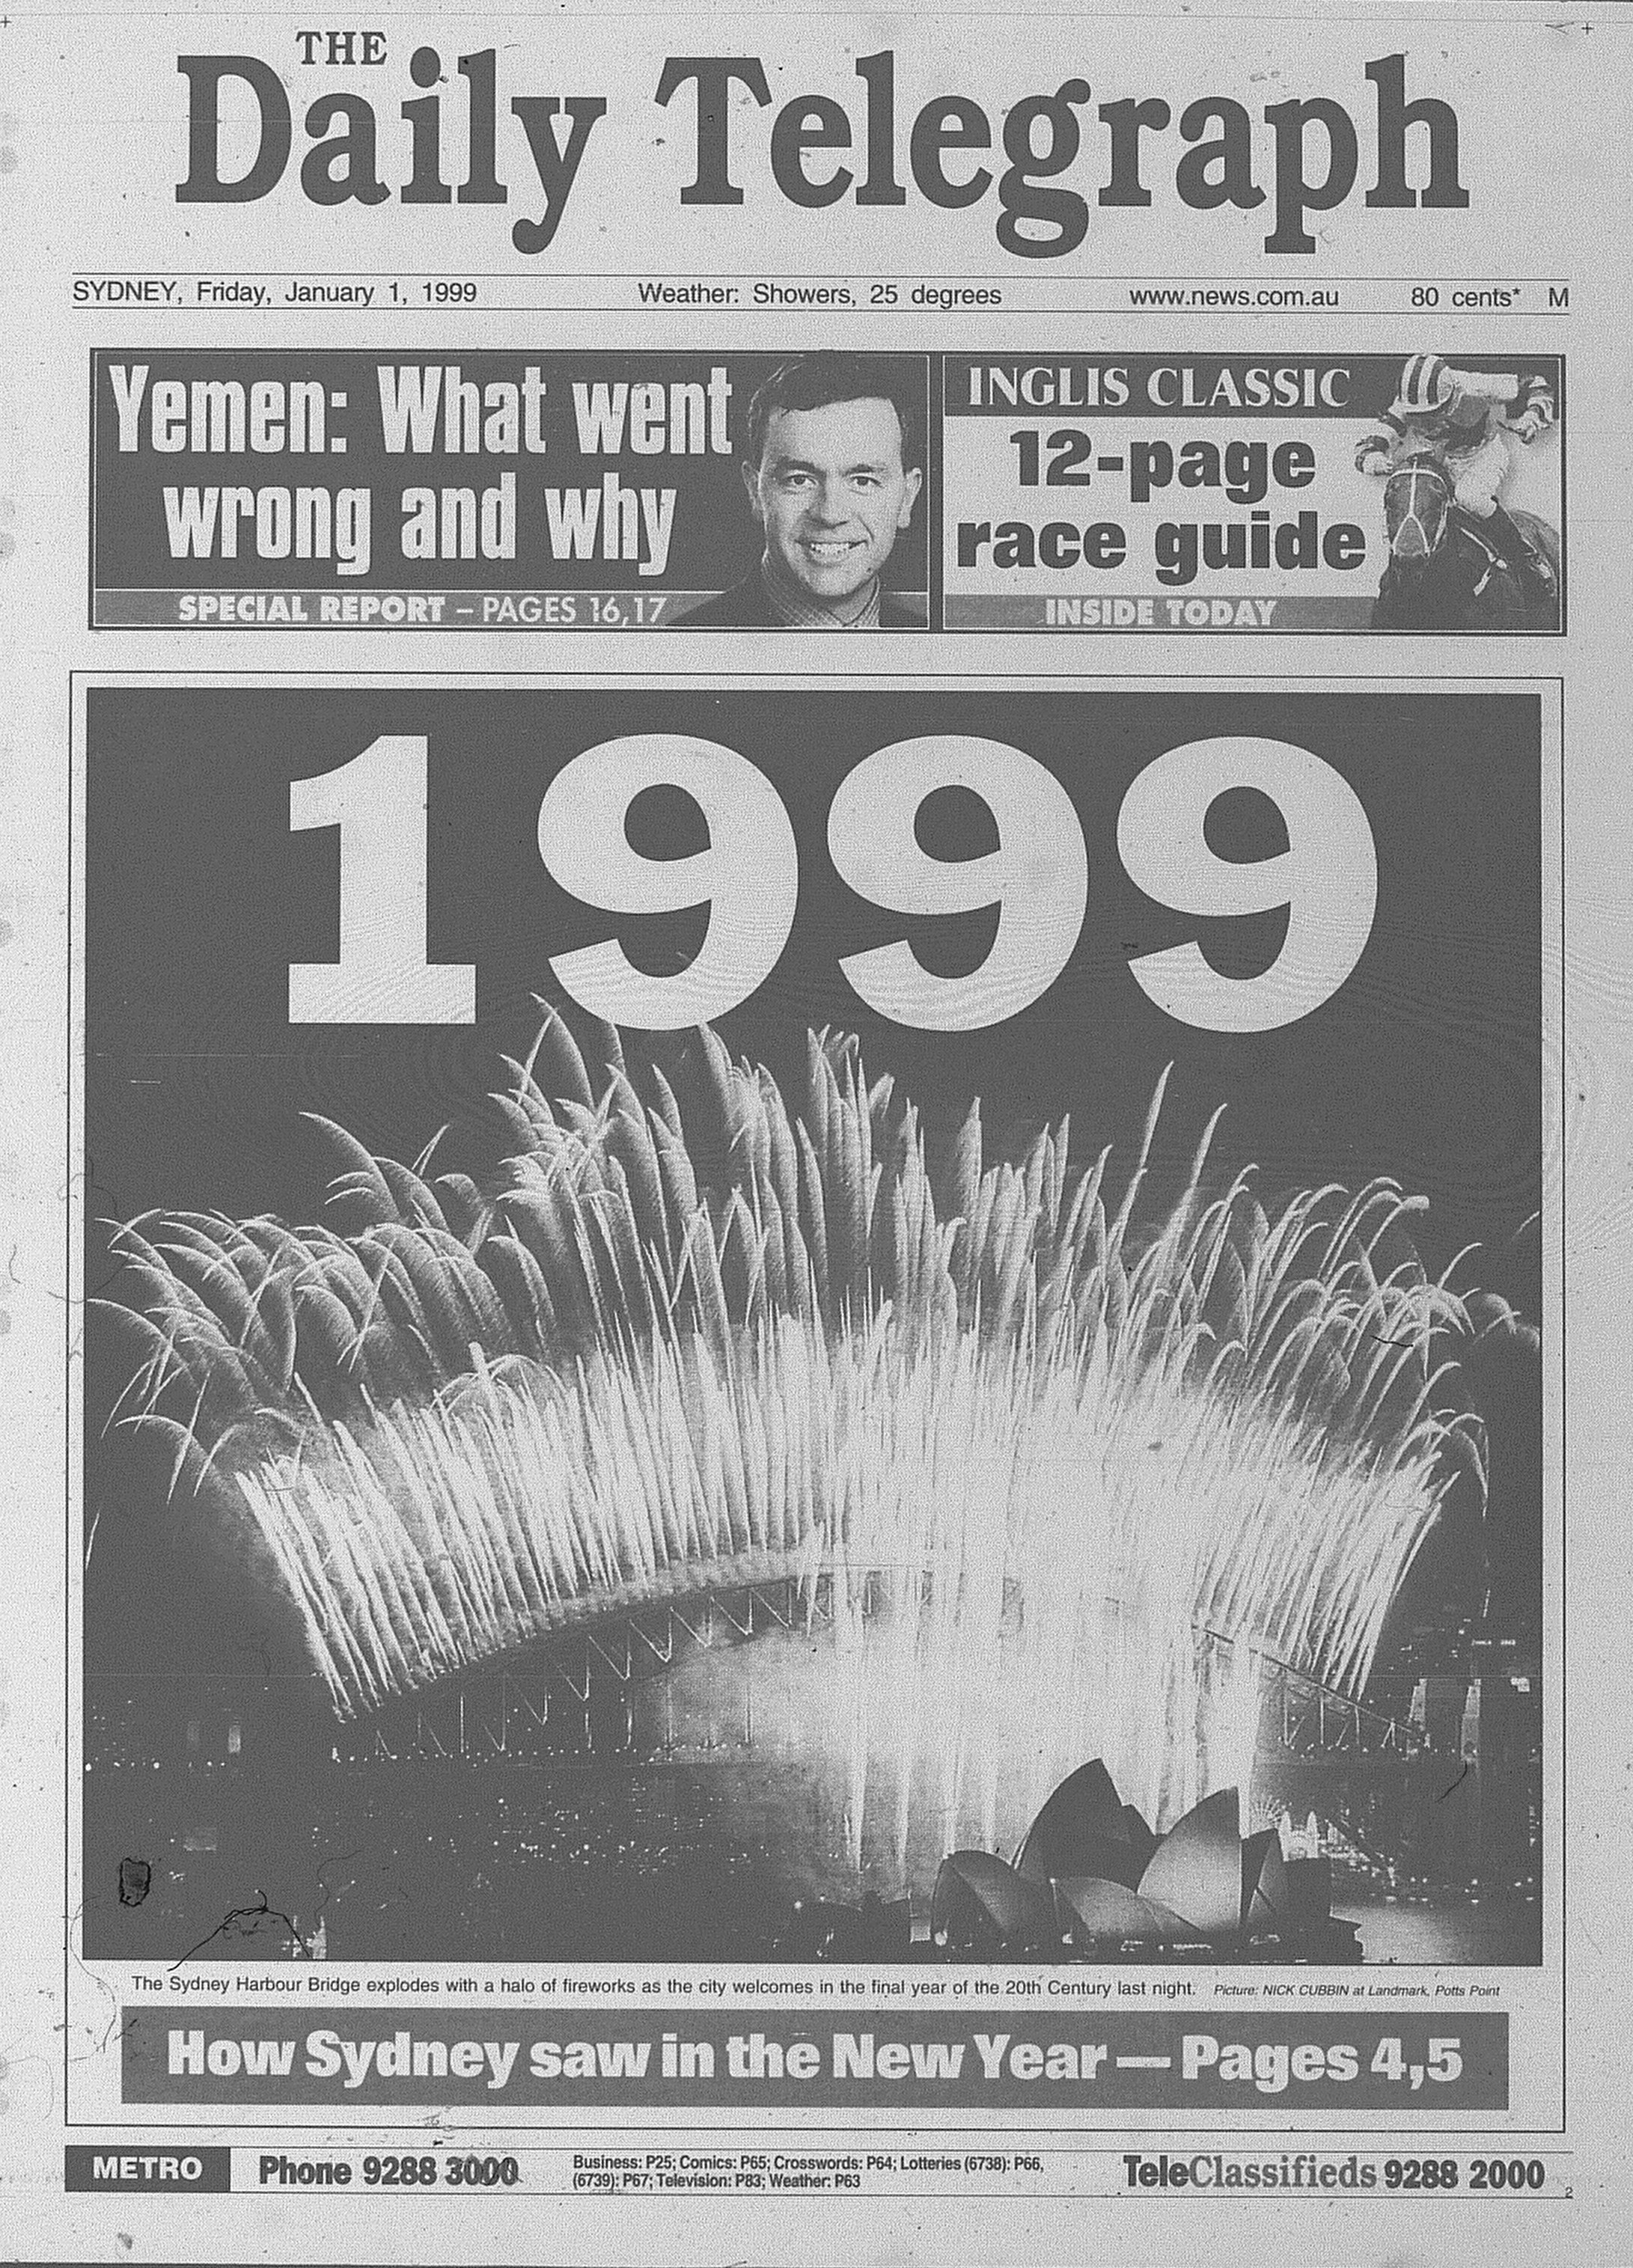 Sydney NYE January 1 1999 daily telegraph 1